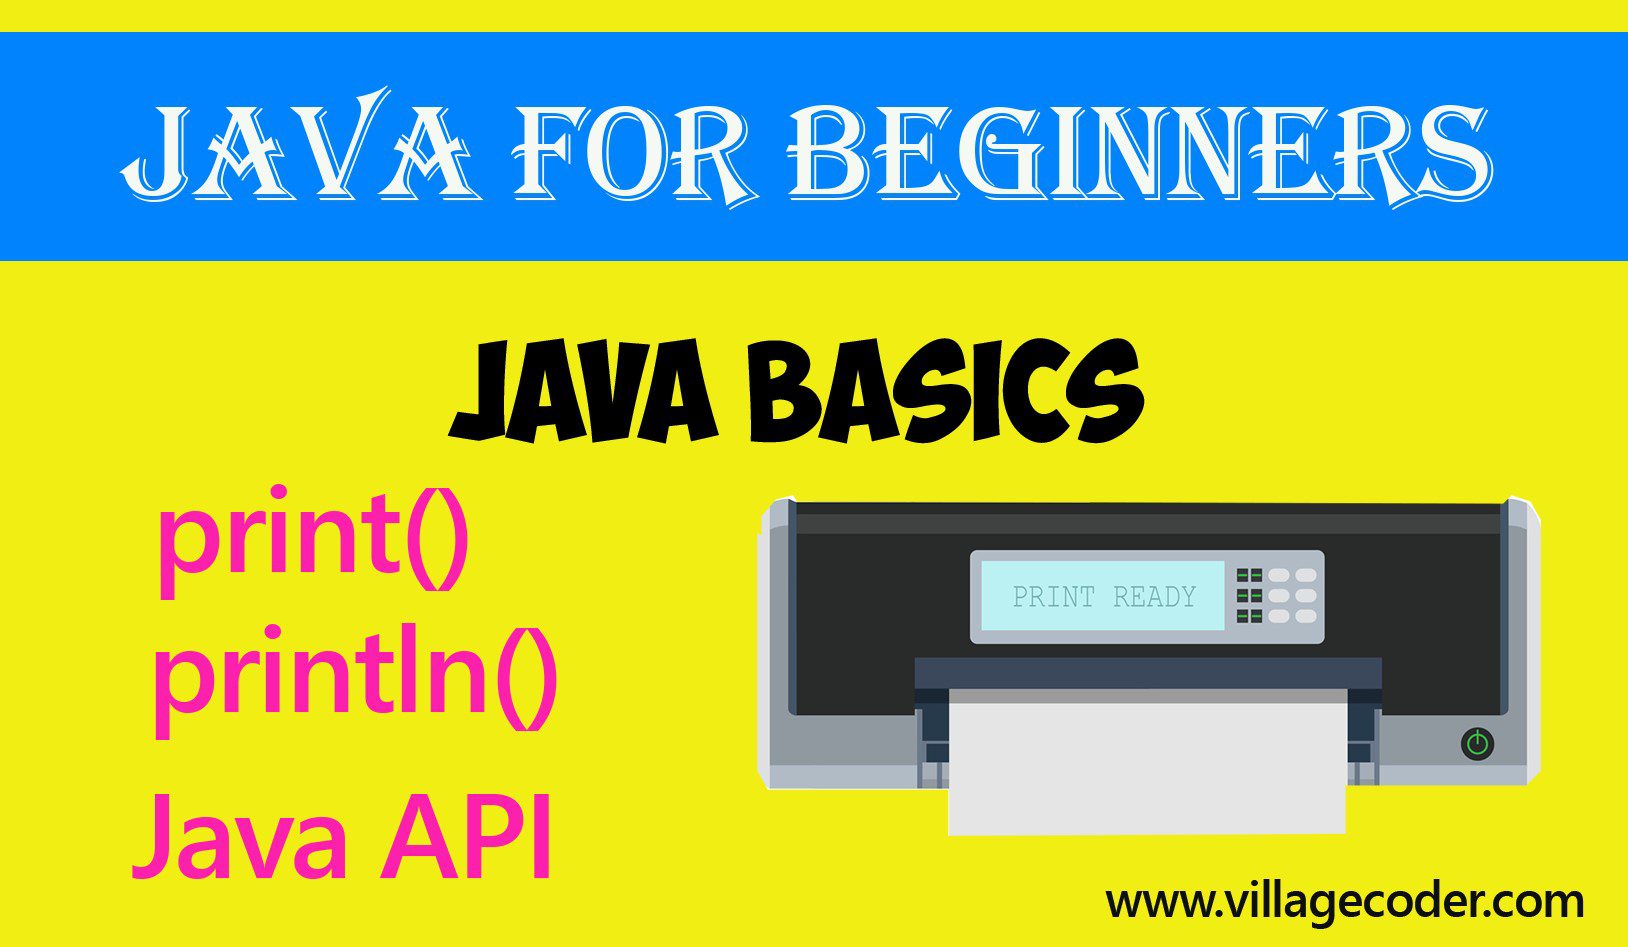 print and println methods - Java for beginners